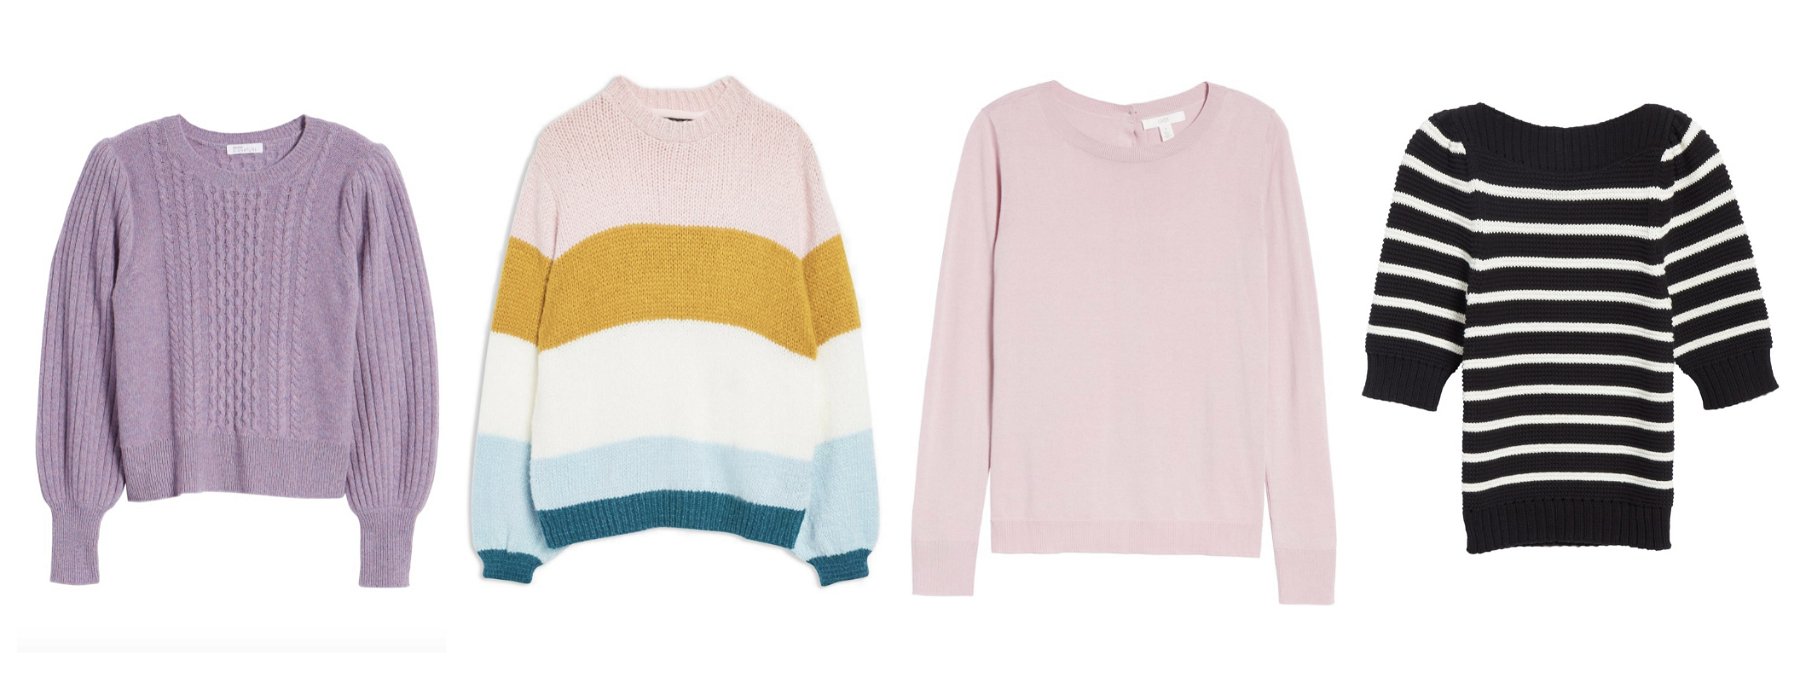 nordstrom anniversary sale picks sweaters 2018